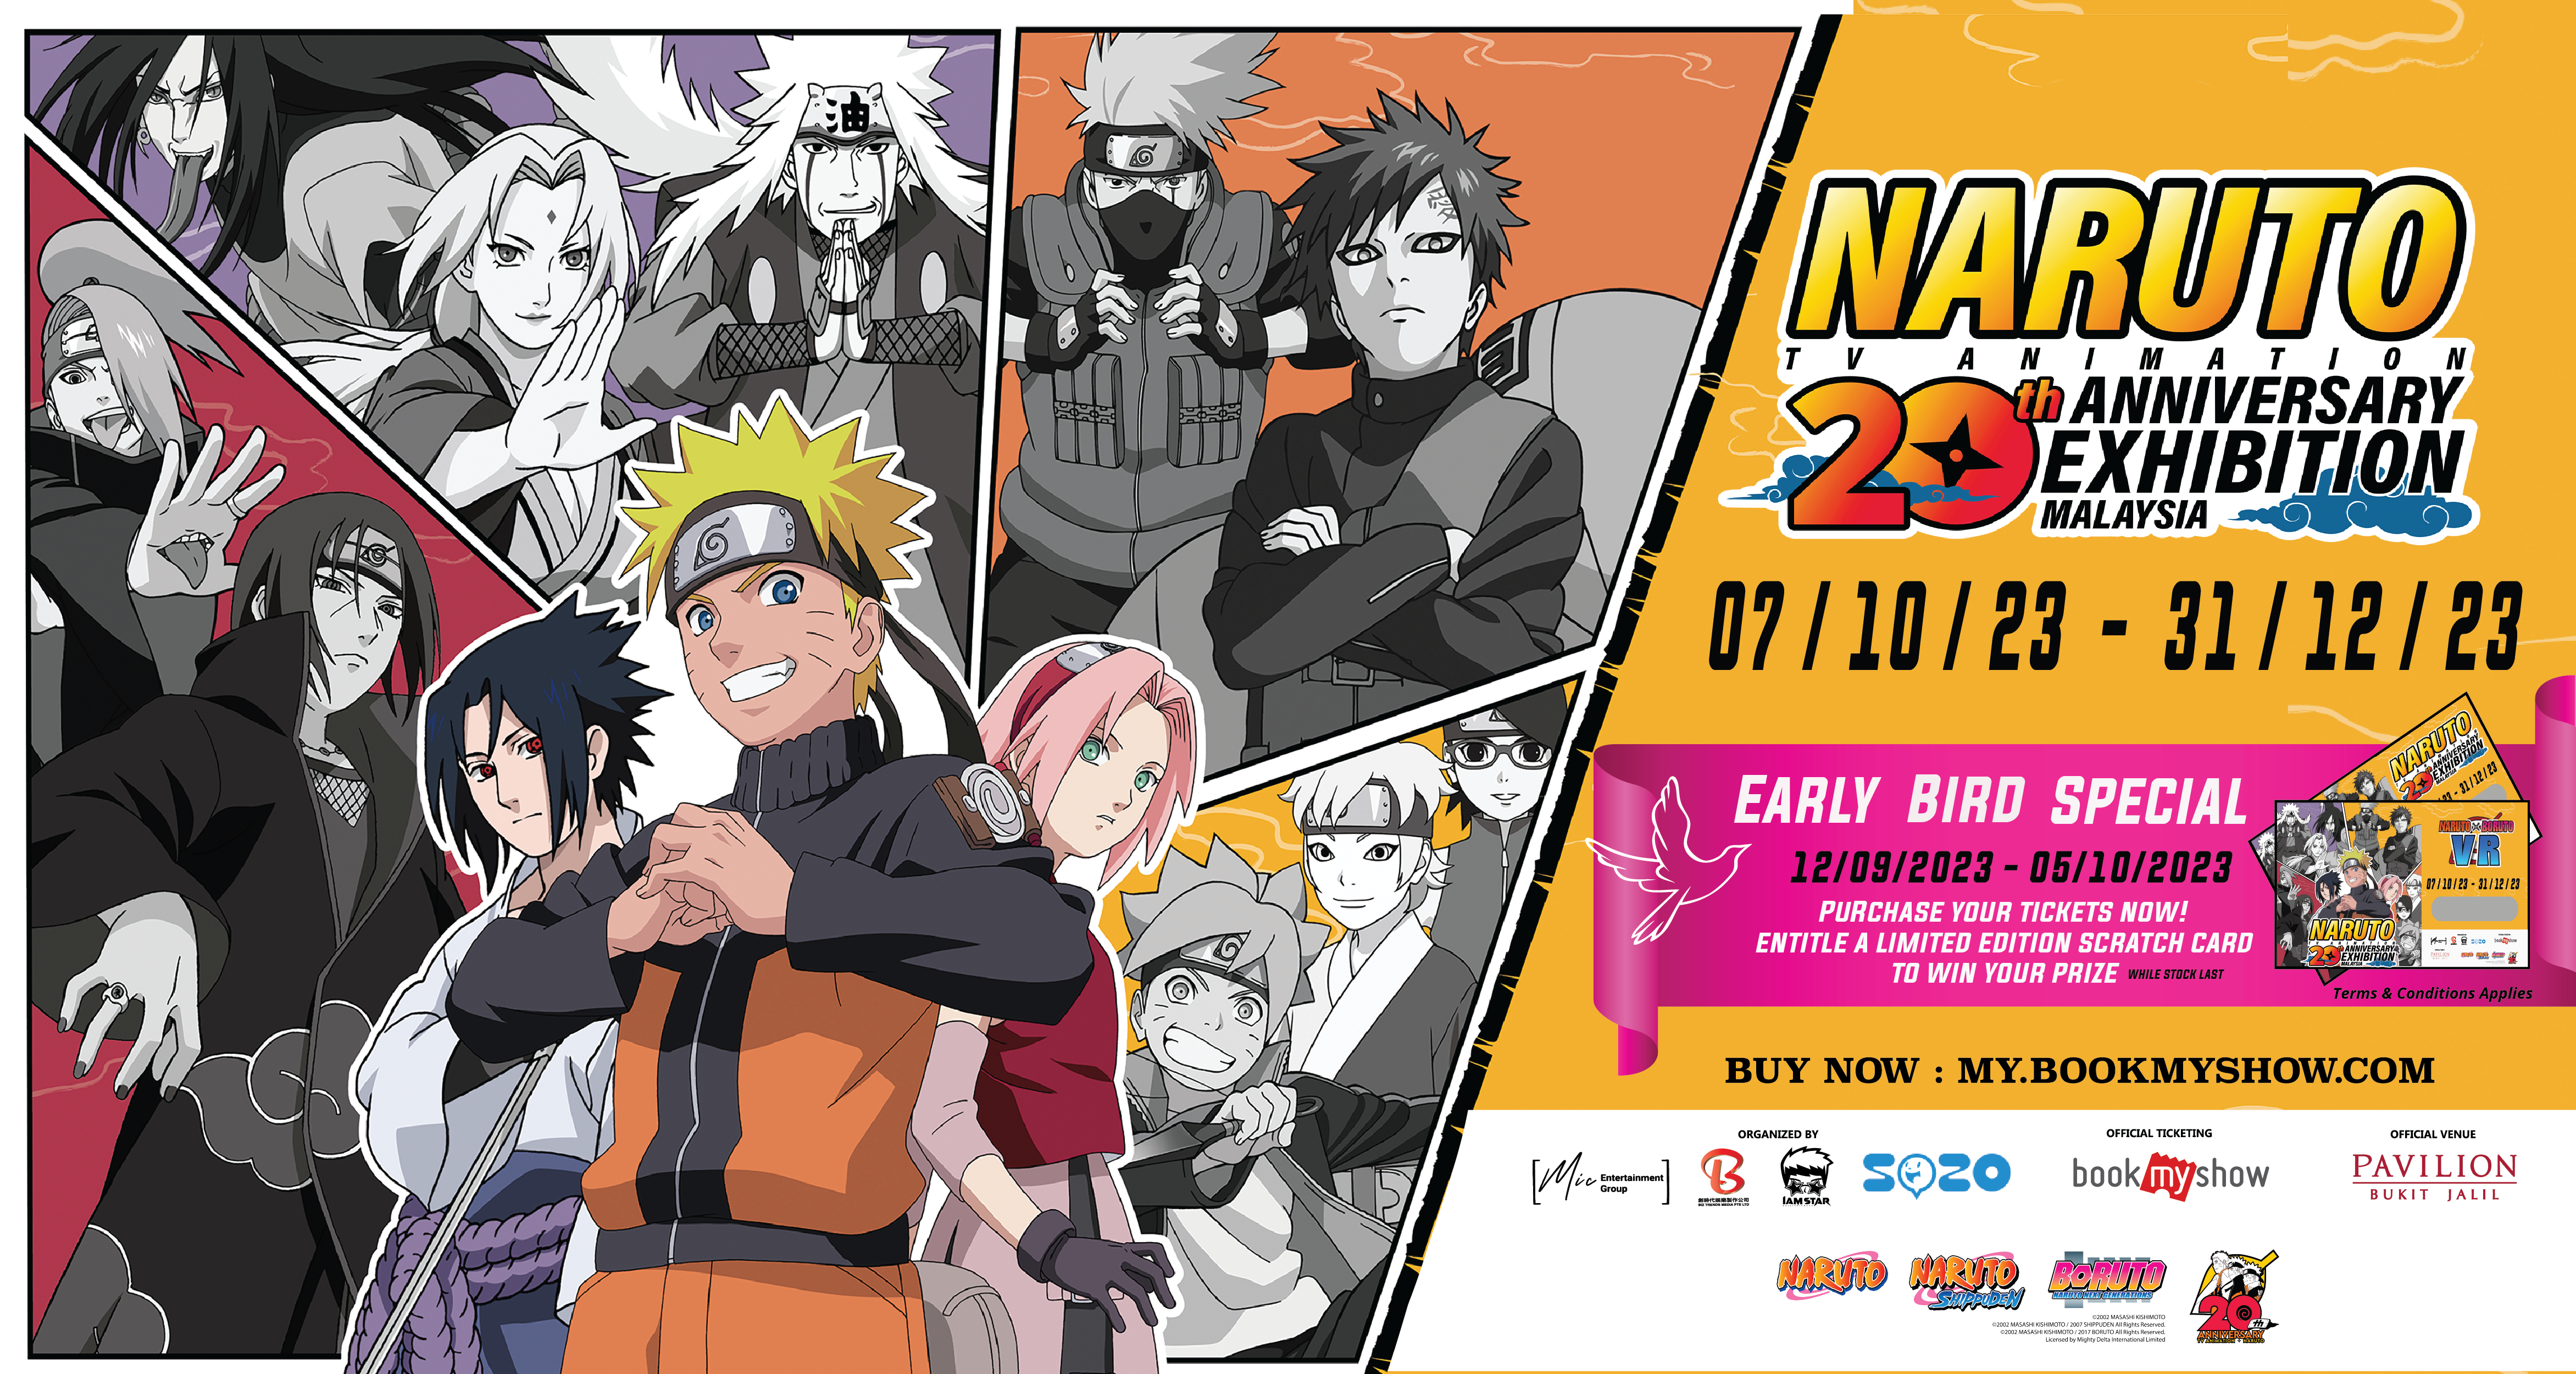 Naruto Exhibition